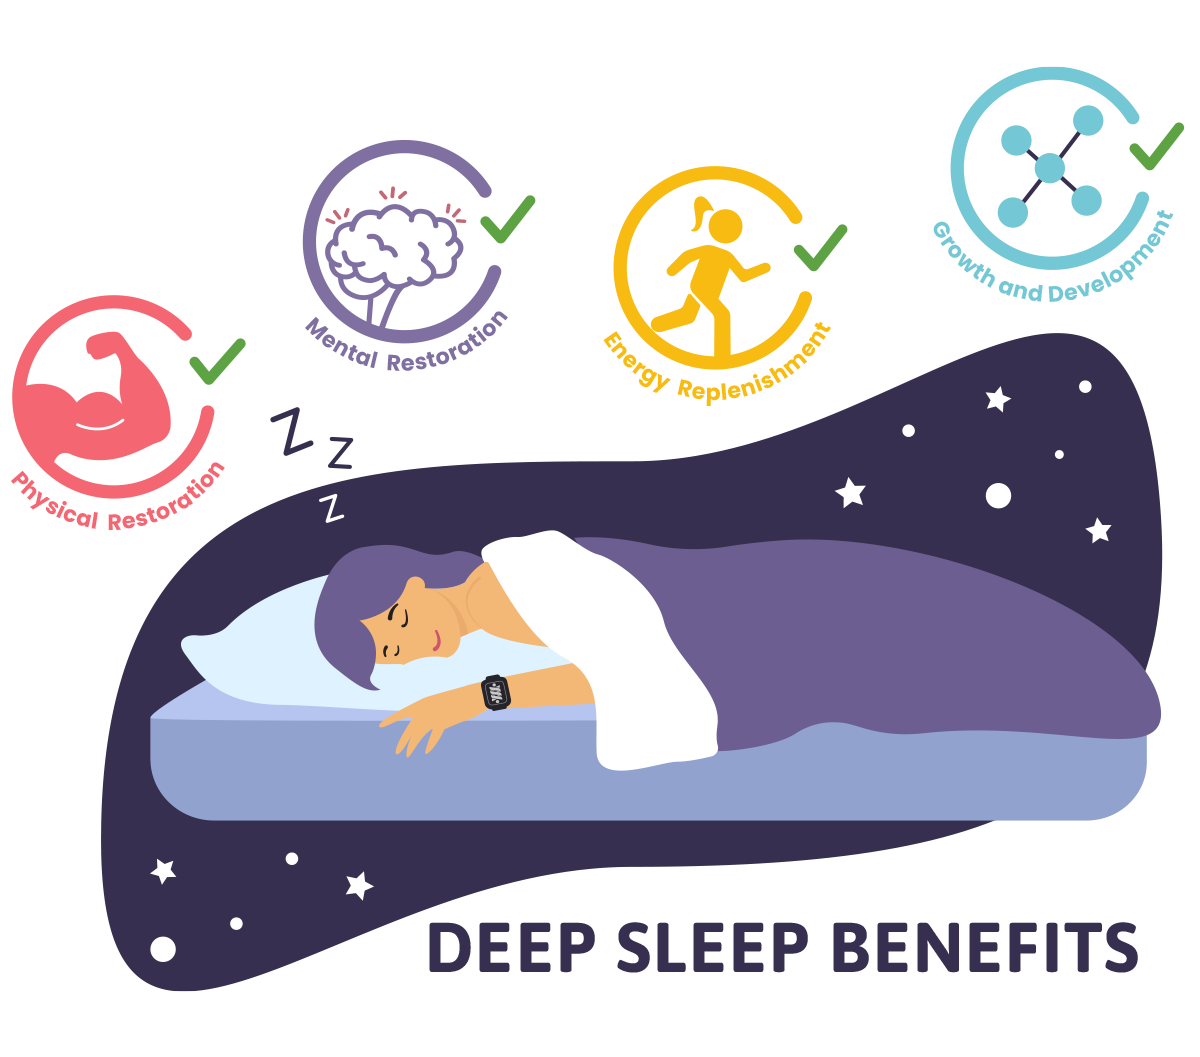 Deep Sleep Stages Graphic Image